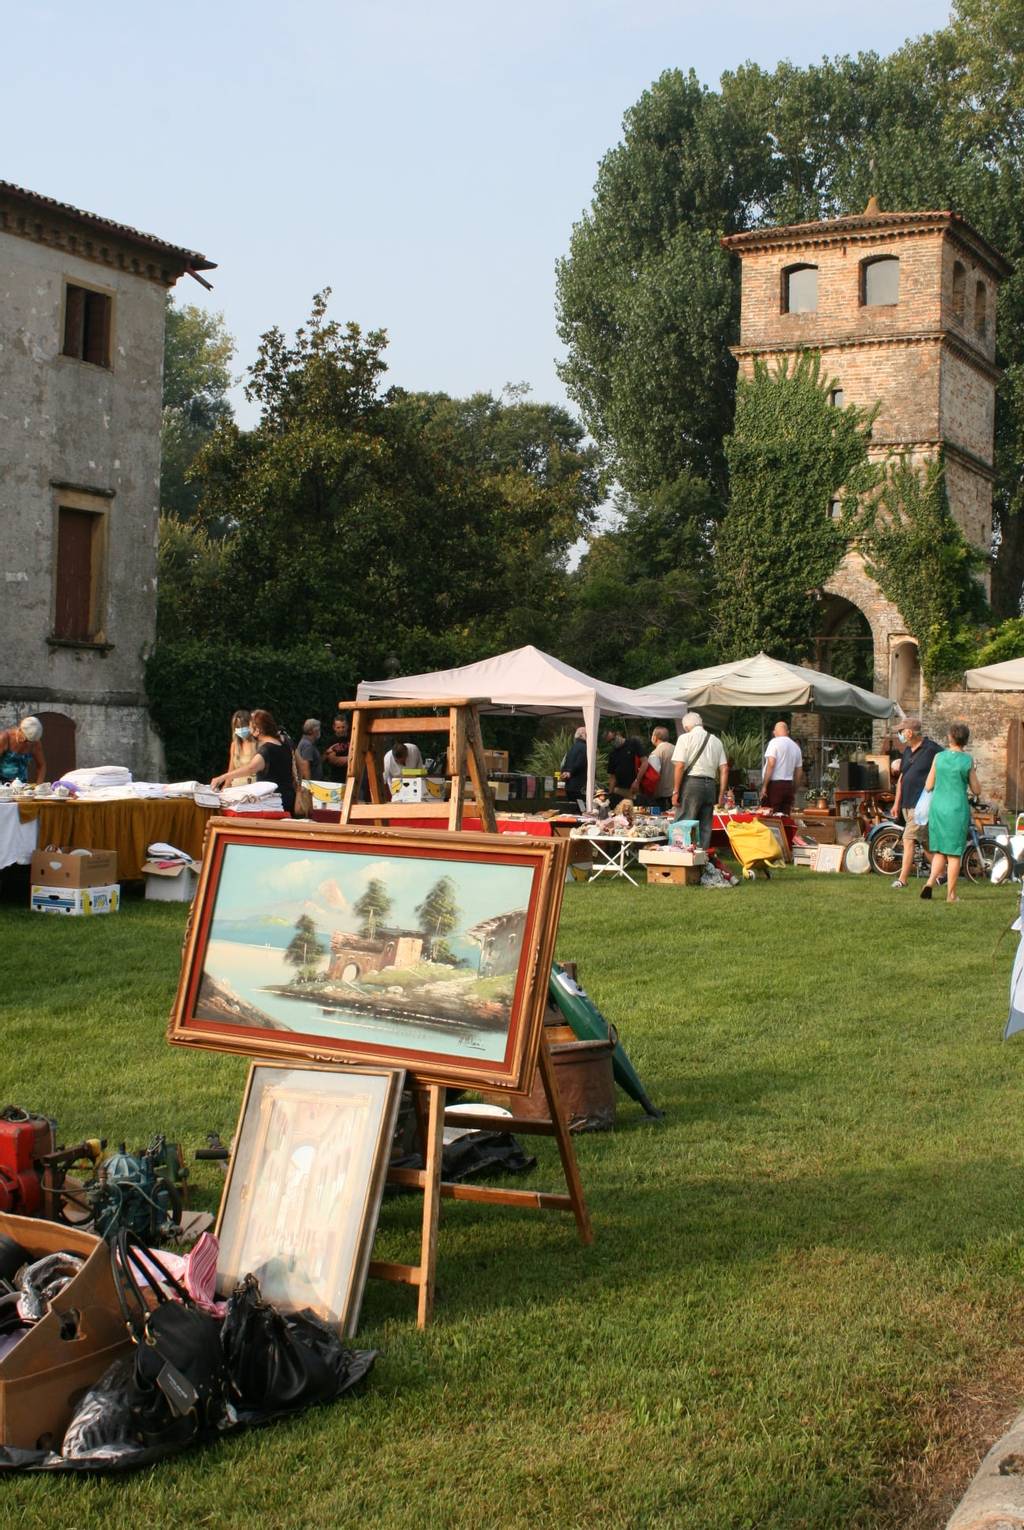 The Market of Villa Roberti